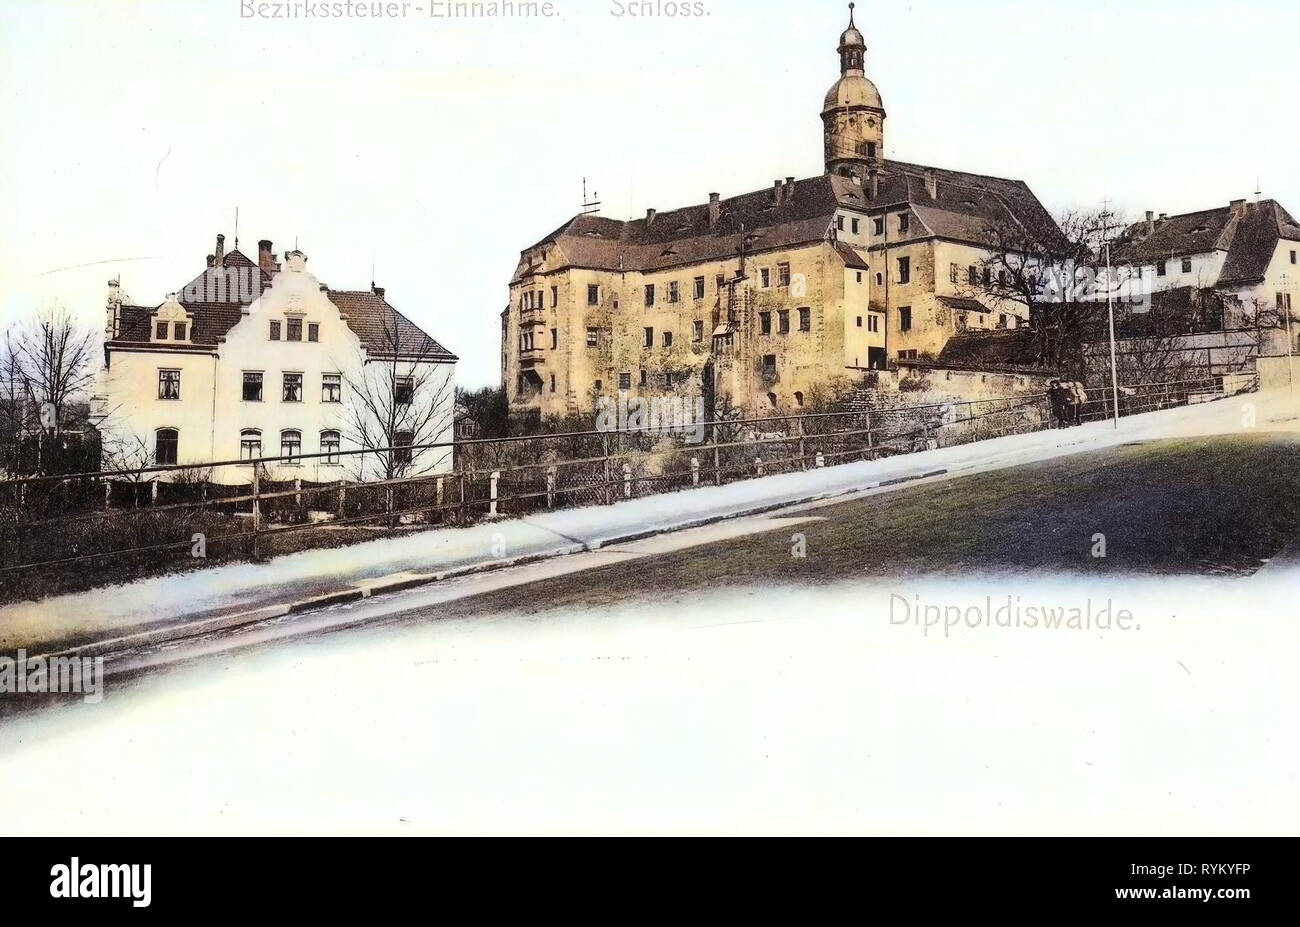 Schloss Dippoldiswalde, Dippoldiswalde, 1902, Landkreis Sächsische Schweiz-Osterzgebirge, Bezirkssteuer, Einnahme, Schloß, Germany Stock Photo